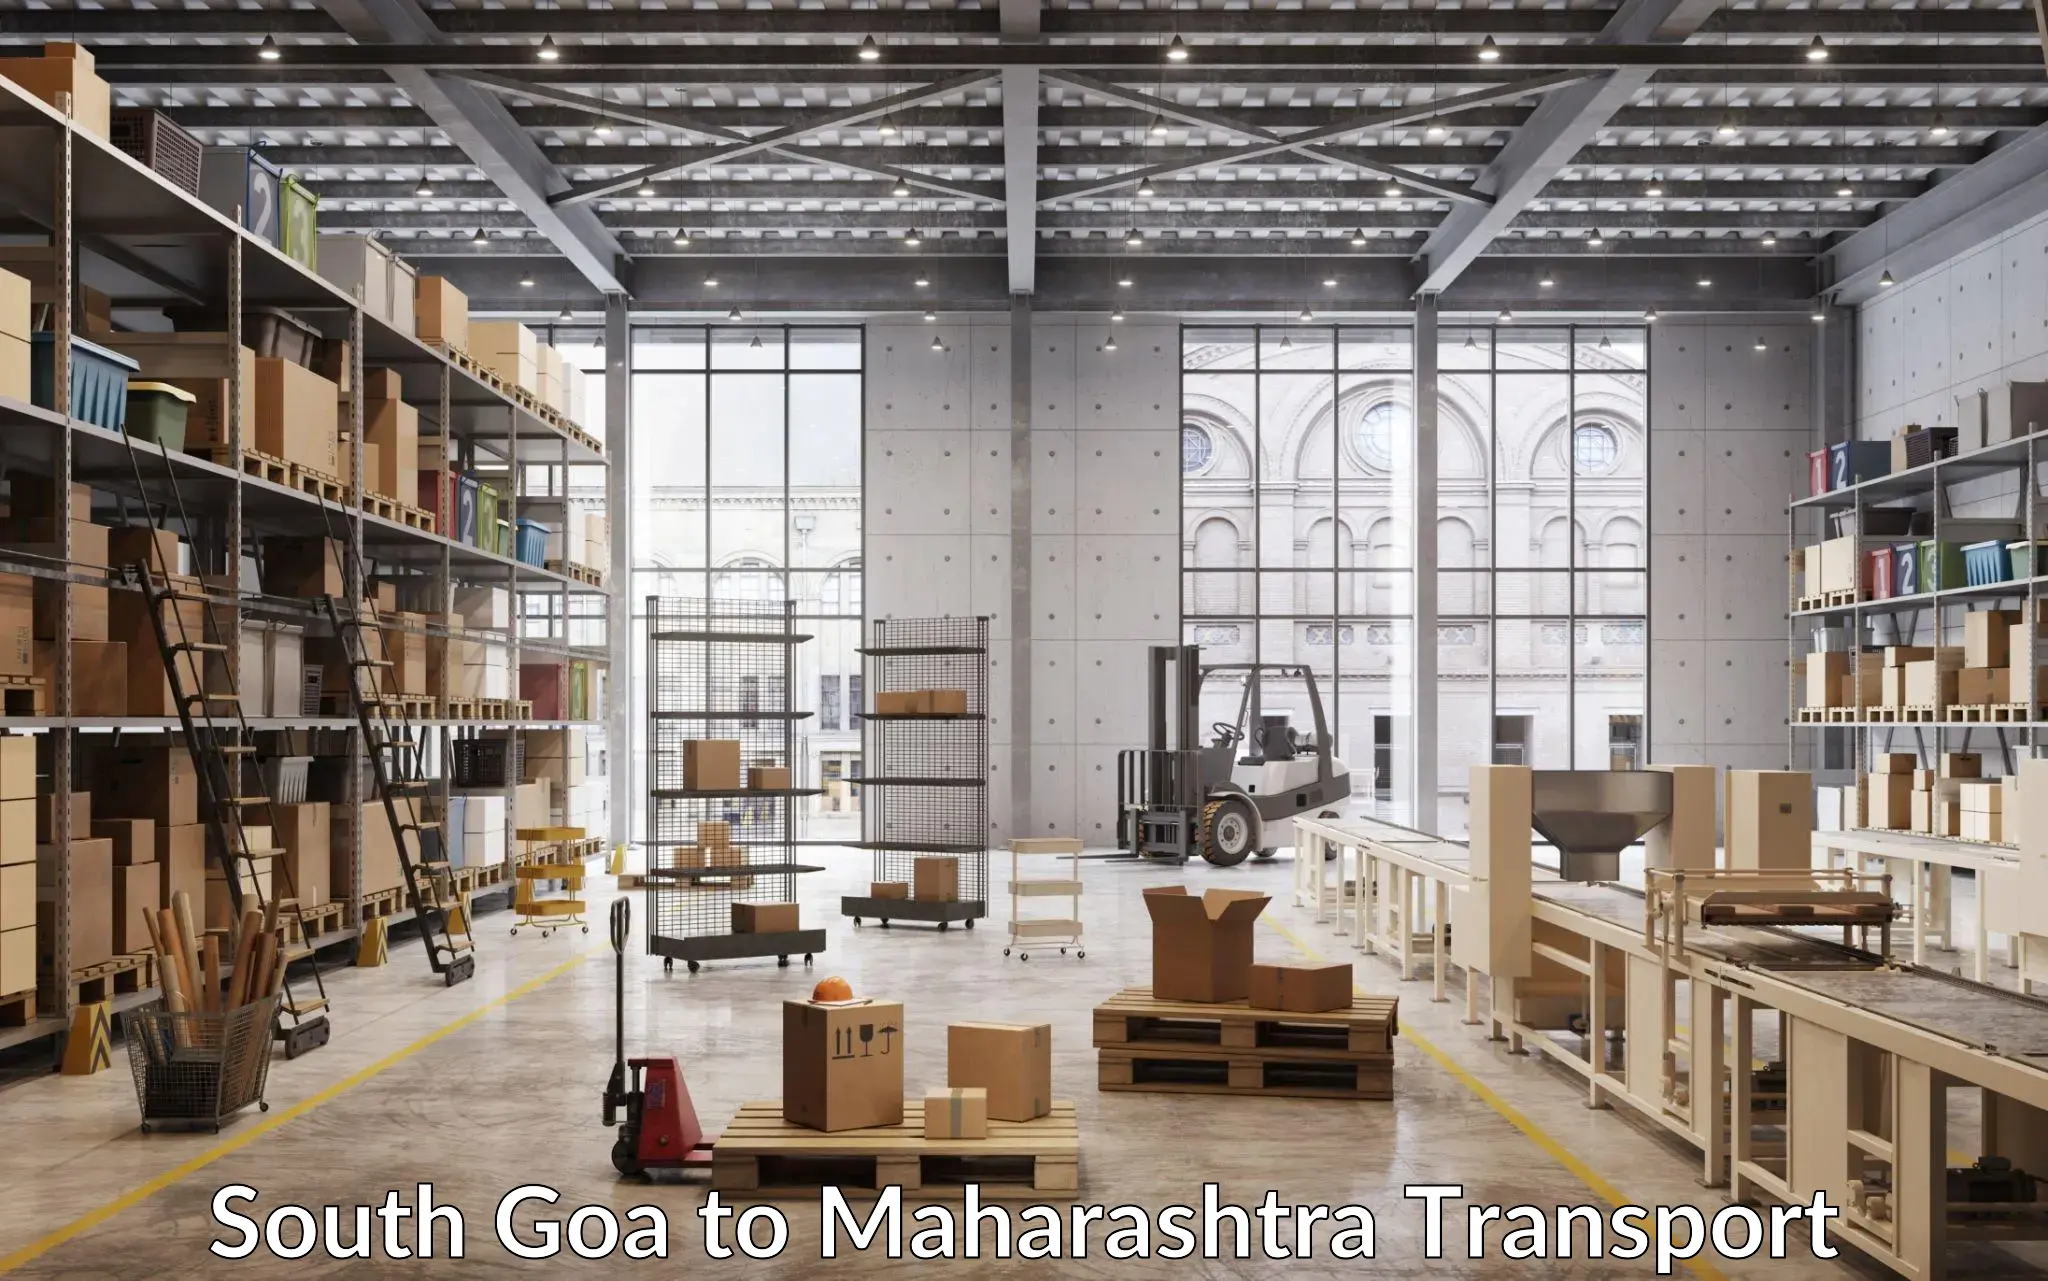 Sending bike to another city South Goa to Tata Institute of Social Sciences Mumbai